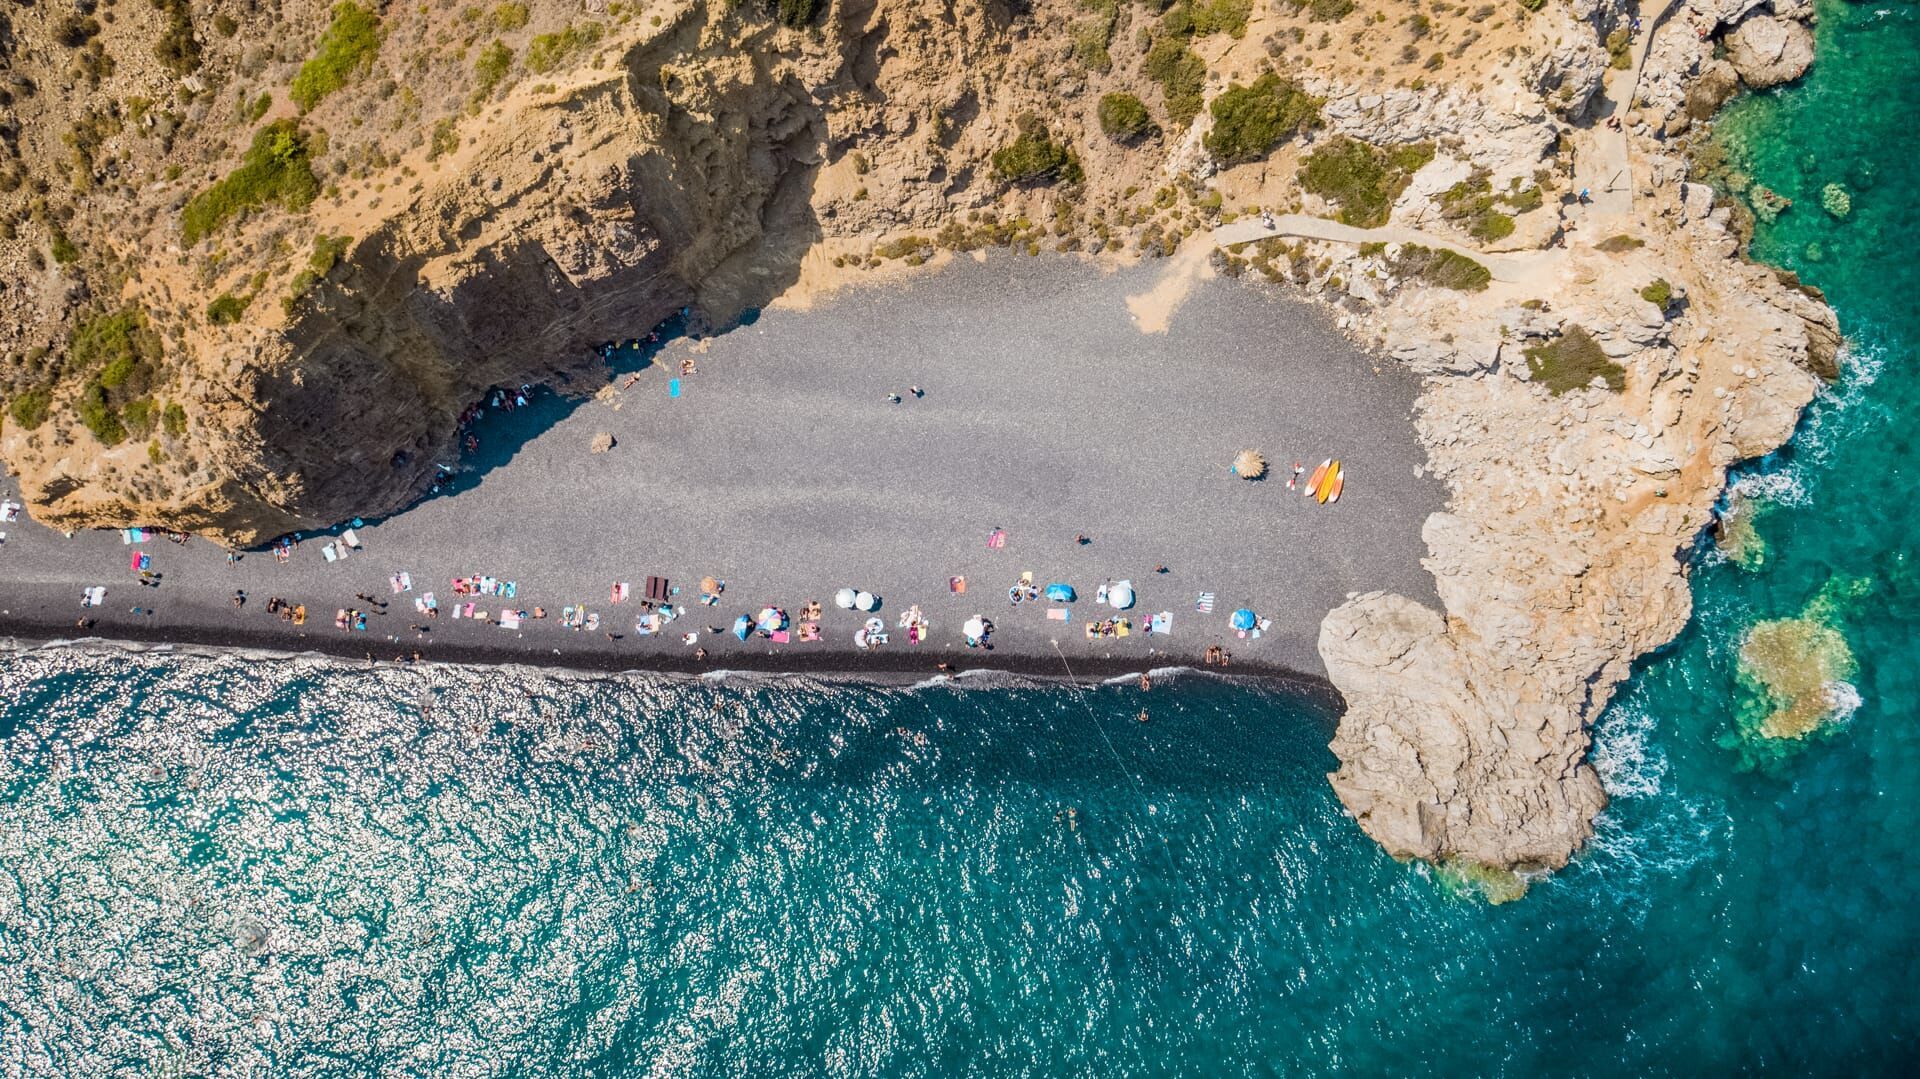 Mavra Volia Beach Chios